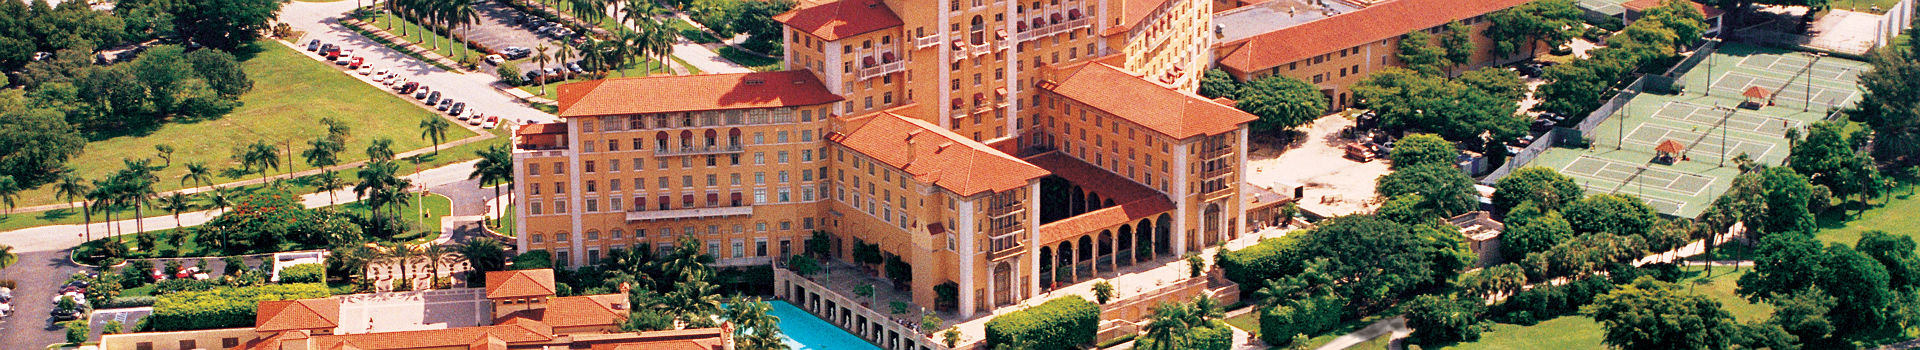 Biltmore Hotel - Miami - Floride